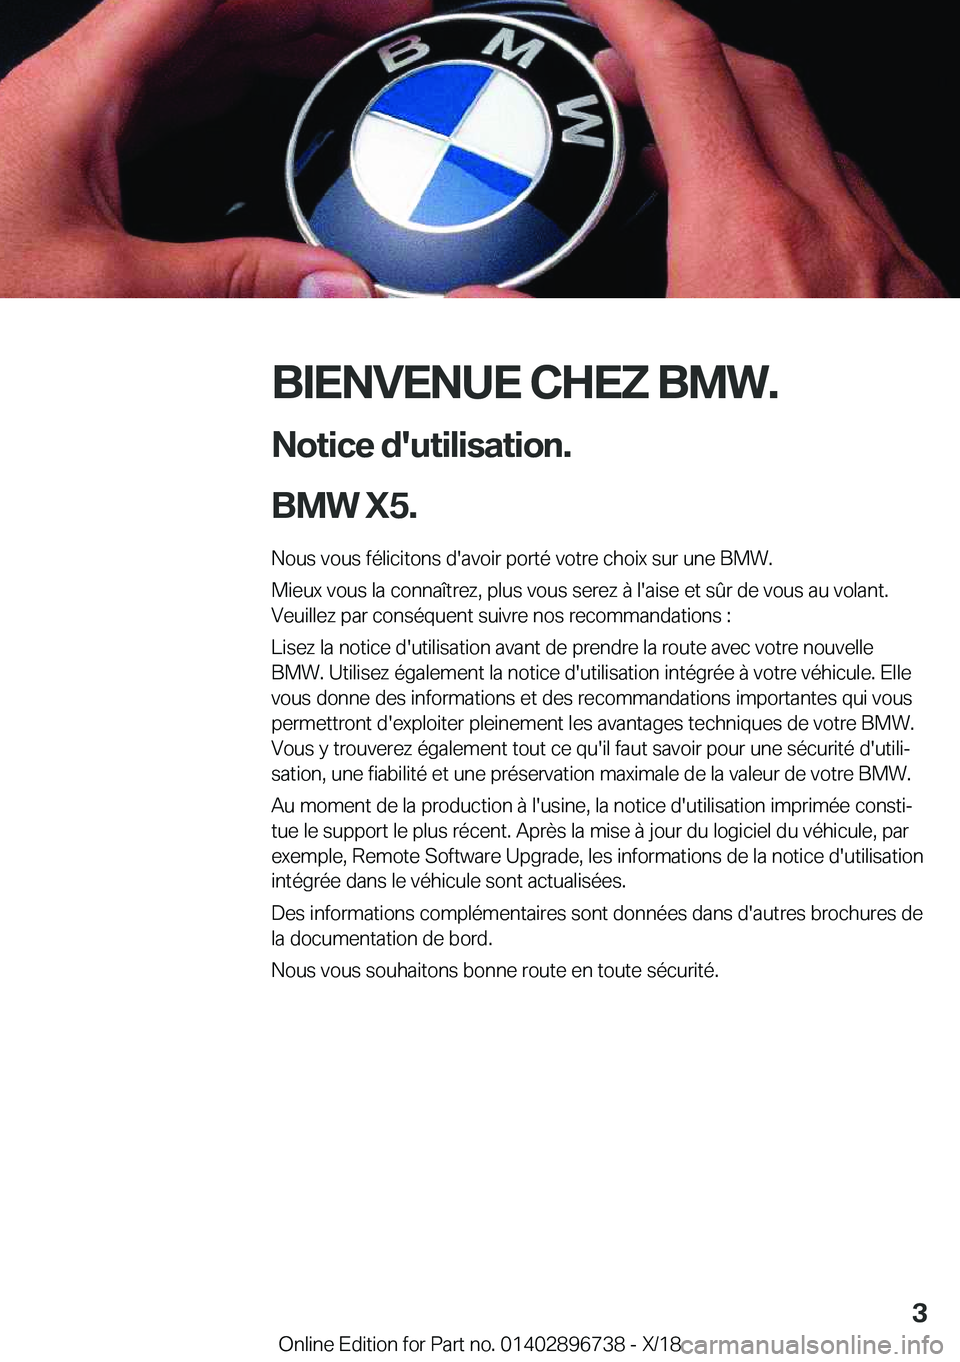 BMW X5 2019  Notices Demploi (in French) �B�I�E�N�V�E�N�U�E��C�H�E�Z��B�M�W�.�N�o�t�i�c�e��d�'�u�t�i�l�i�s�a�t�i�o�n�.
�B�M�W��X�5�. �N�o�u�s��v�o�u�s��f�é�l�i�c�i�t�o�n�s��d�'�a�v�o�i�r��p�o�r�t�é��v�o�t�r�e��c�h�o�i�x�